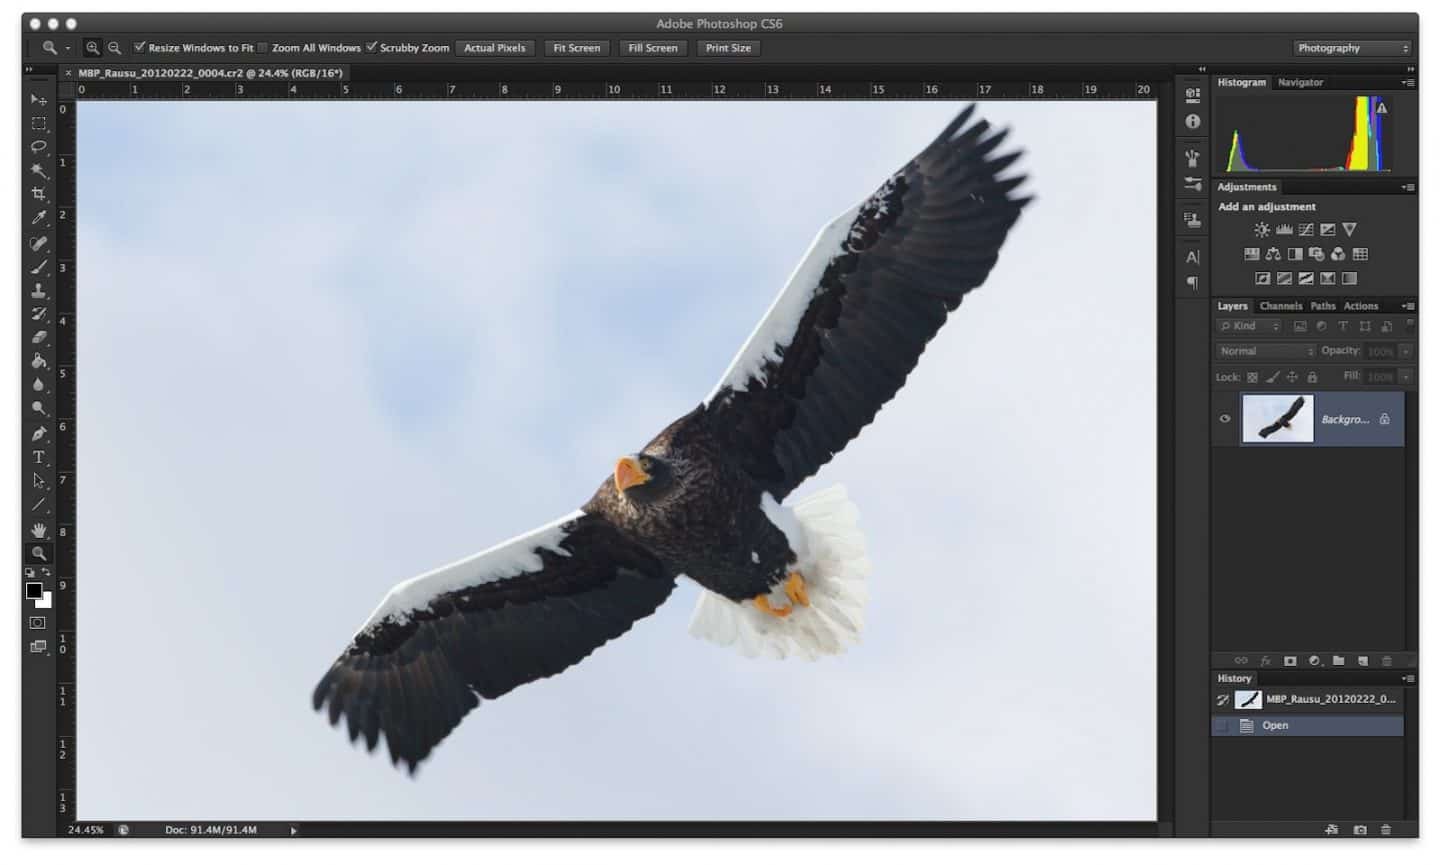 Stellers Sea Eagle in Photoshop CS6